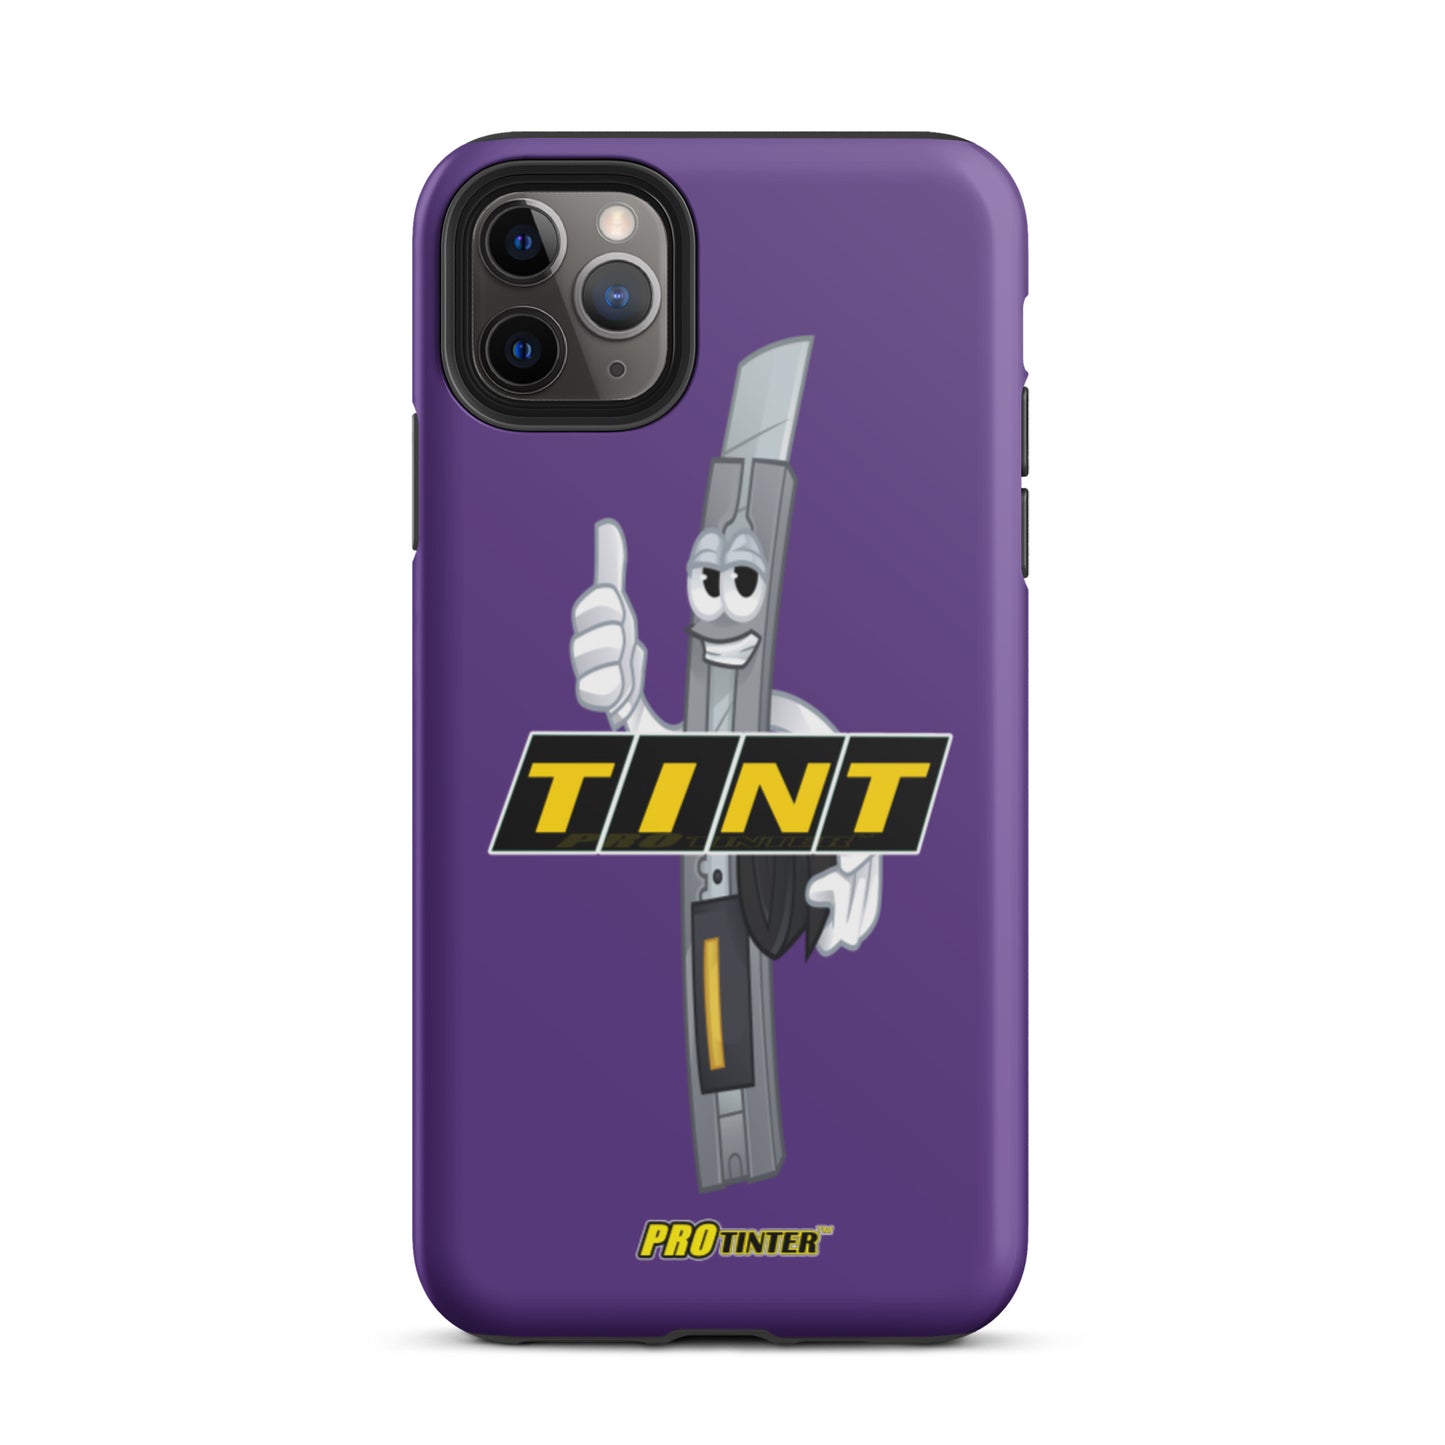 TINT with OLFA Tough iPhone case (Purple)